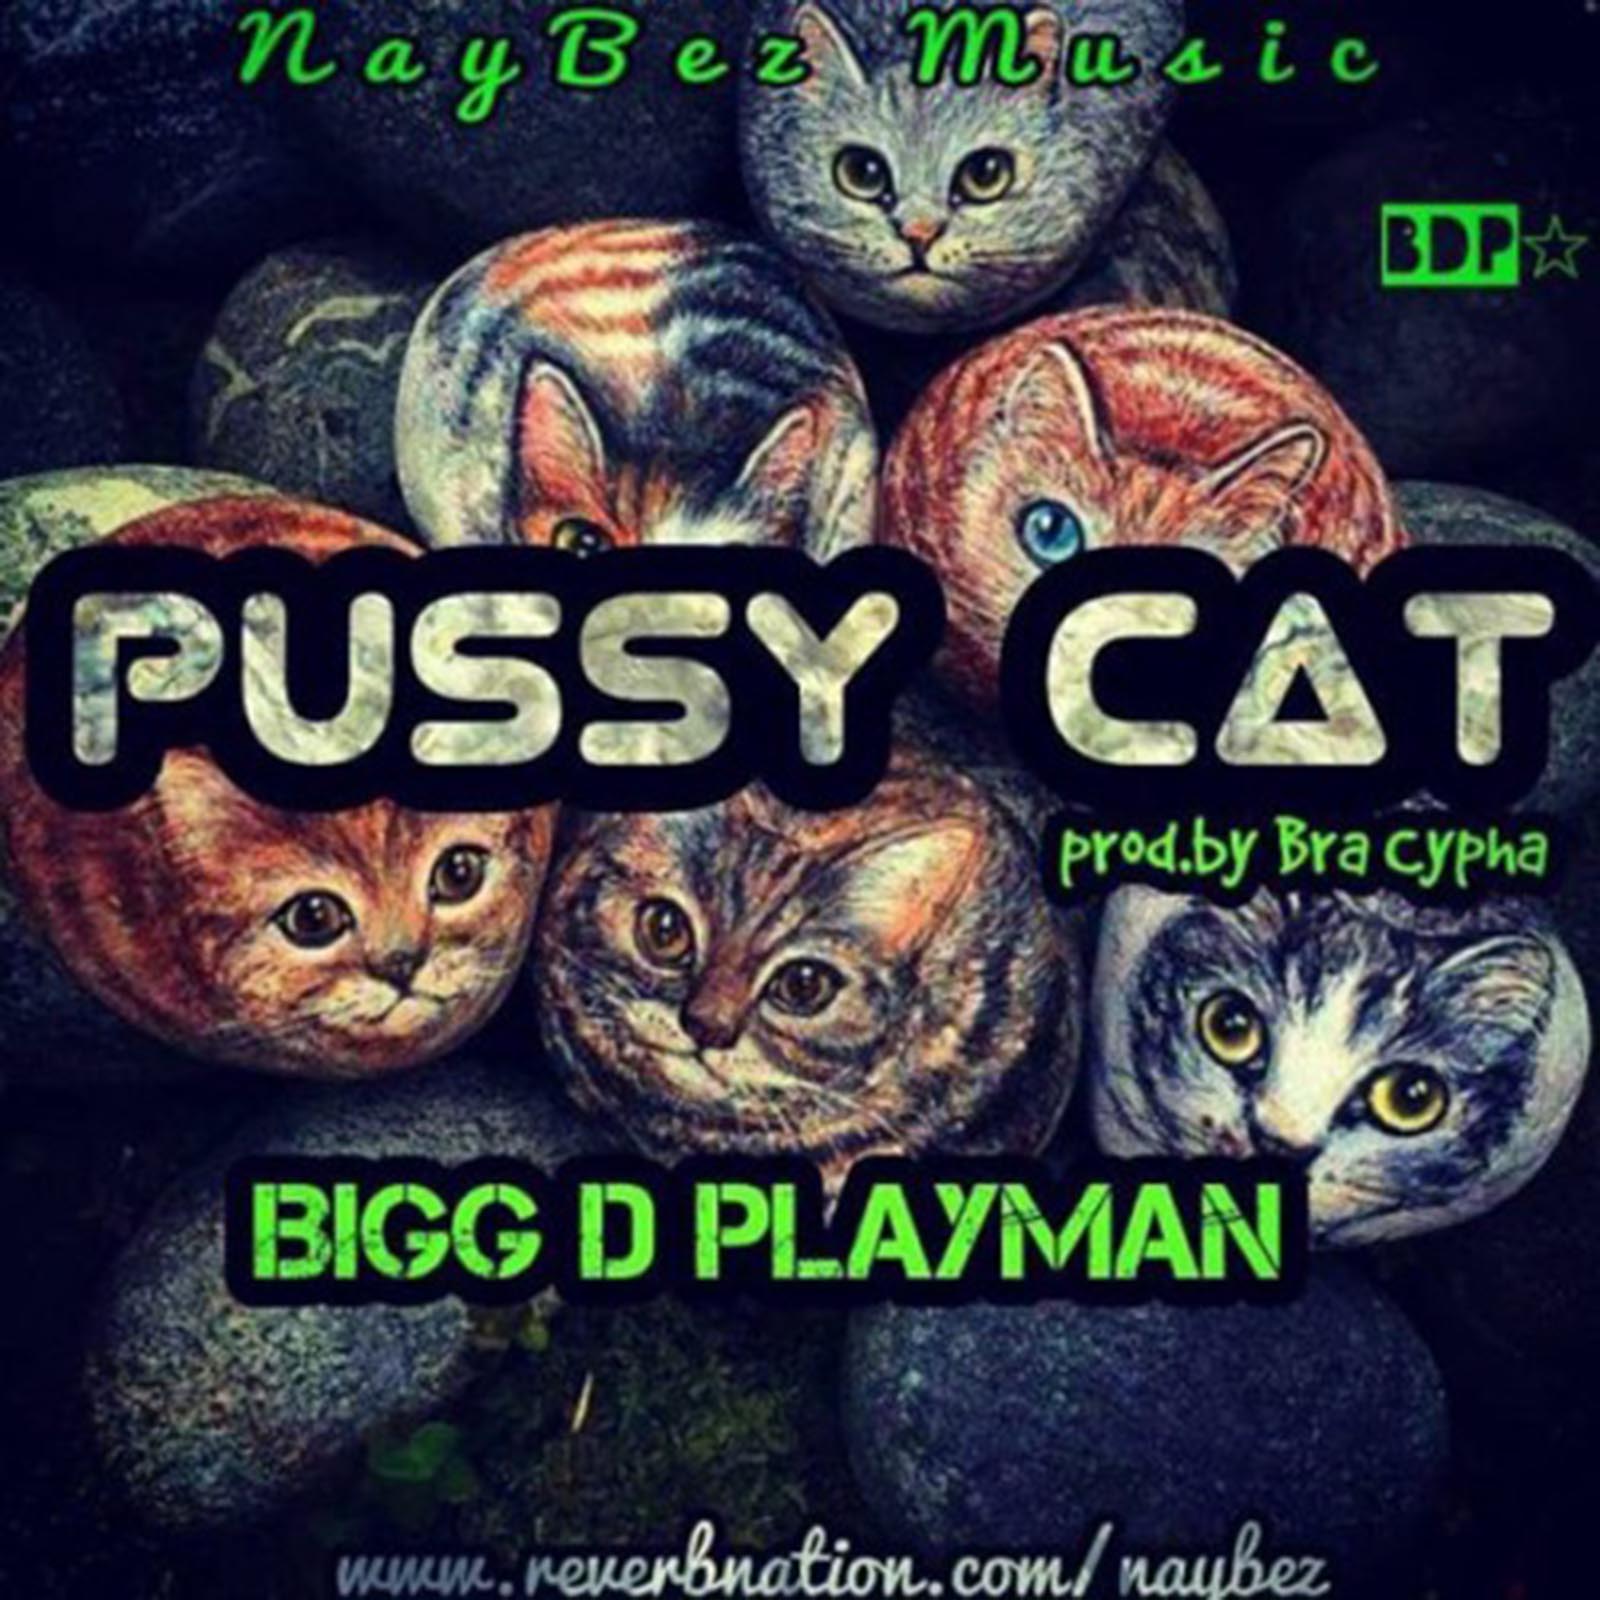 Pussy Cat by Bigg D Playman